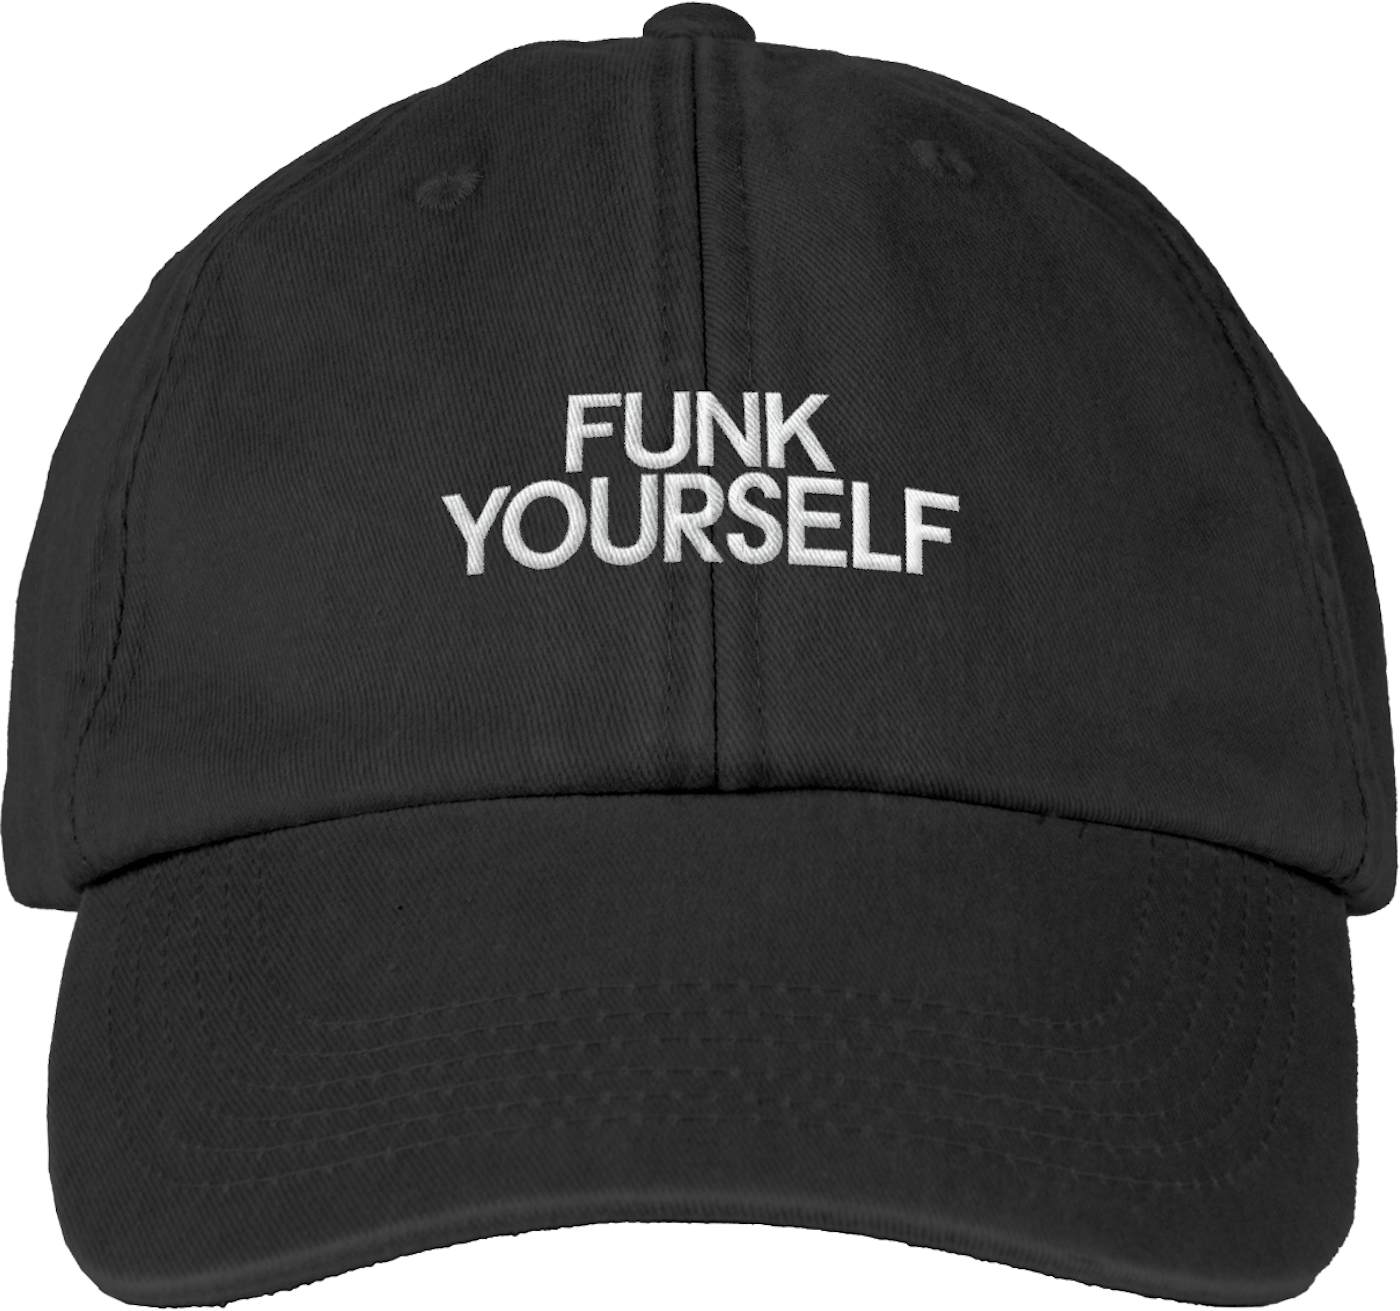 FUNK YOURSELF DAD HAT (BLACK)– Chromeo Store